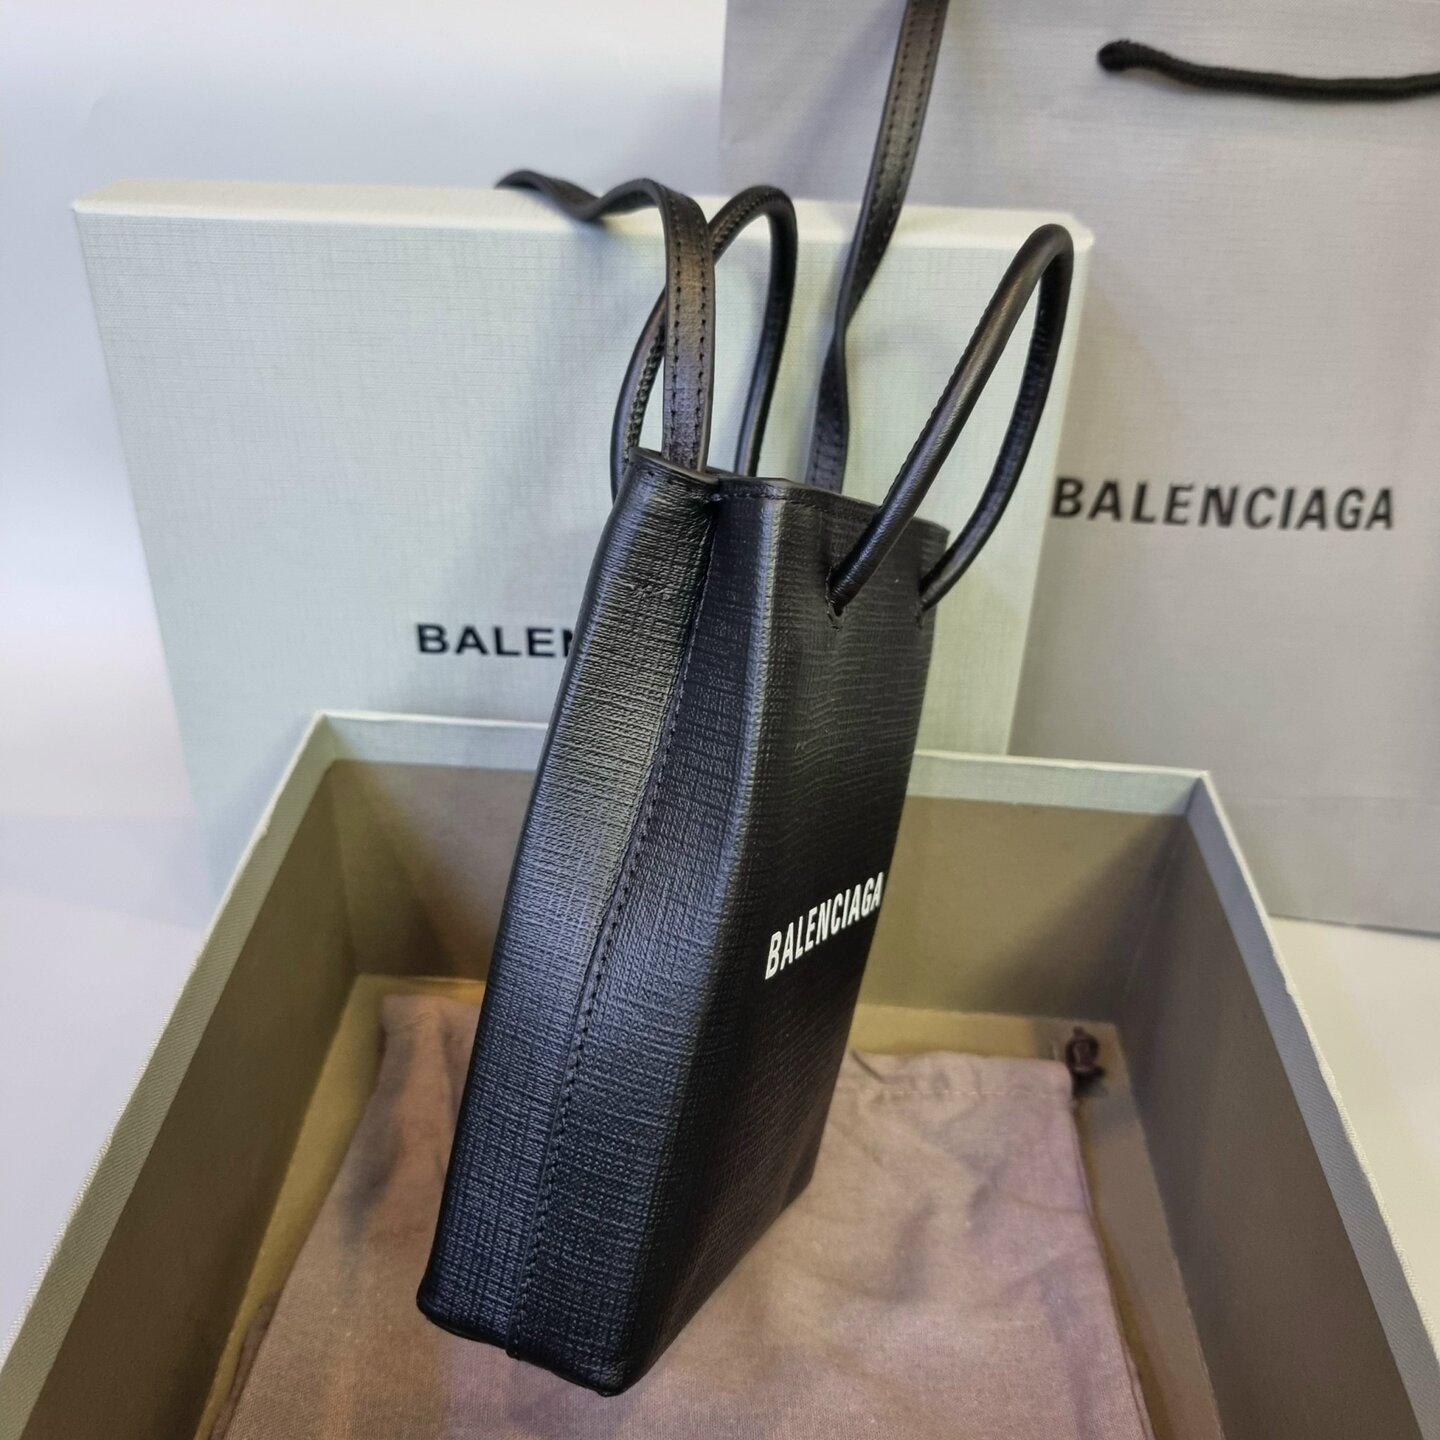 Balenciaga Trolls The Fashion World With SellOut Carrier Bag  Grazia   Fashion  Grazia